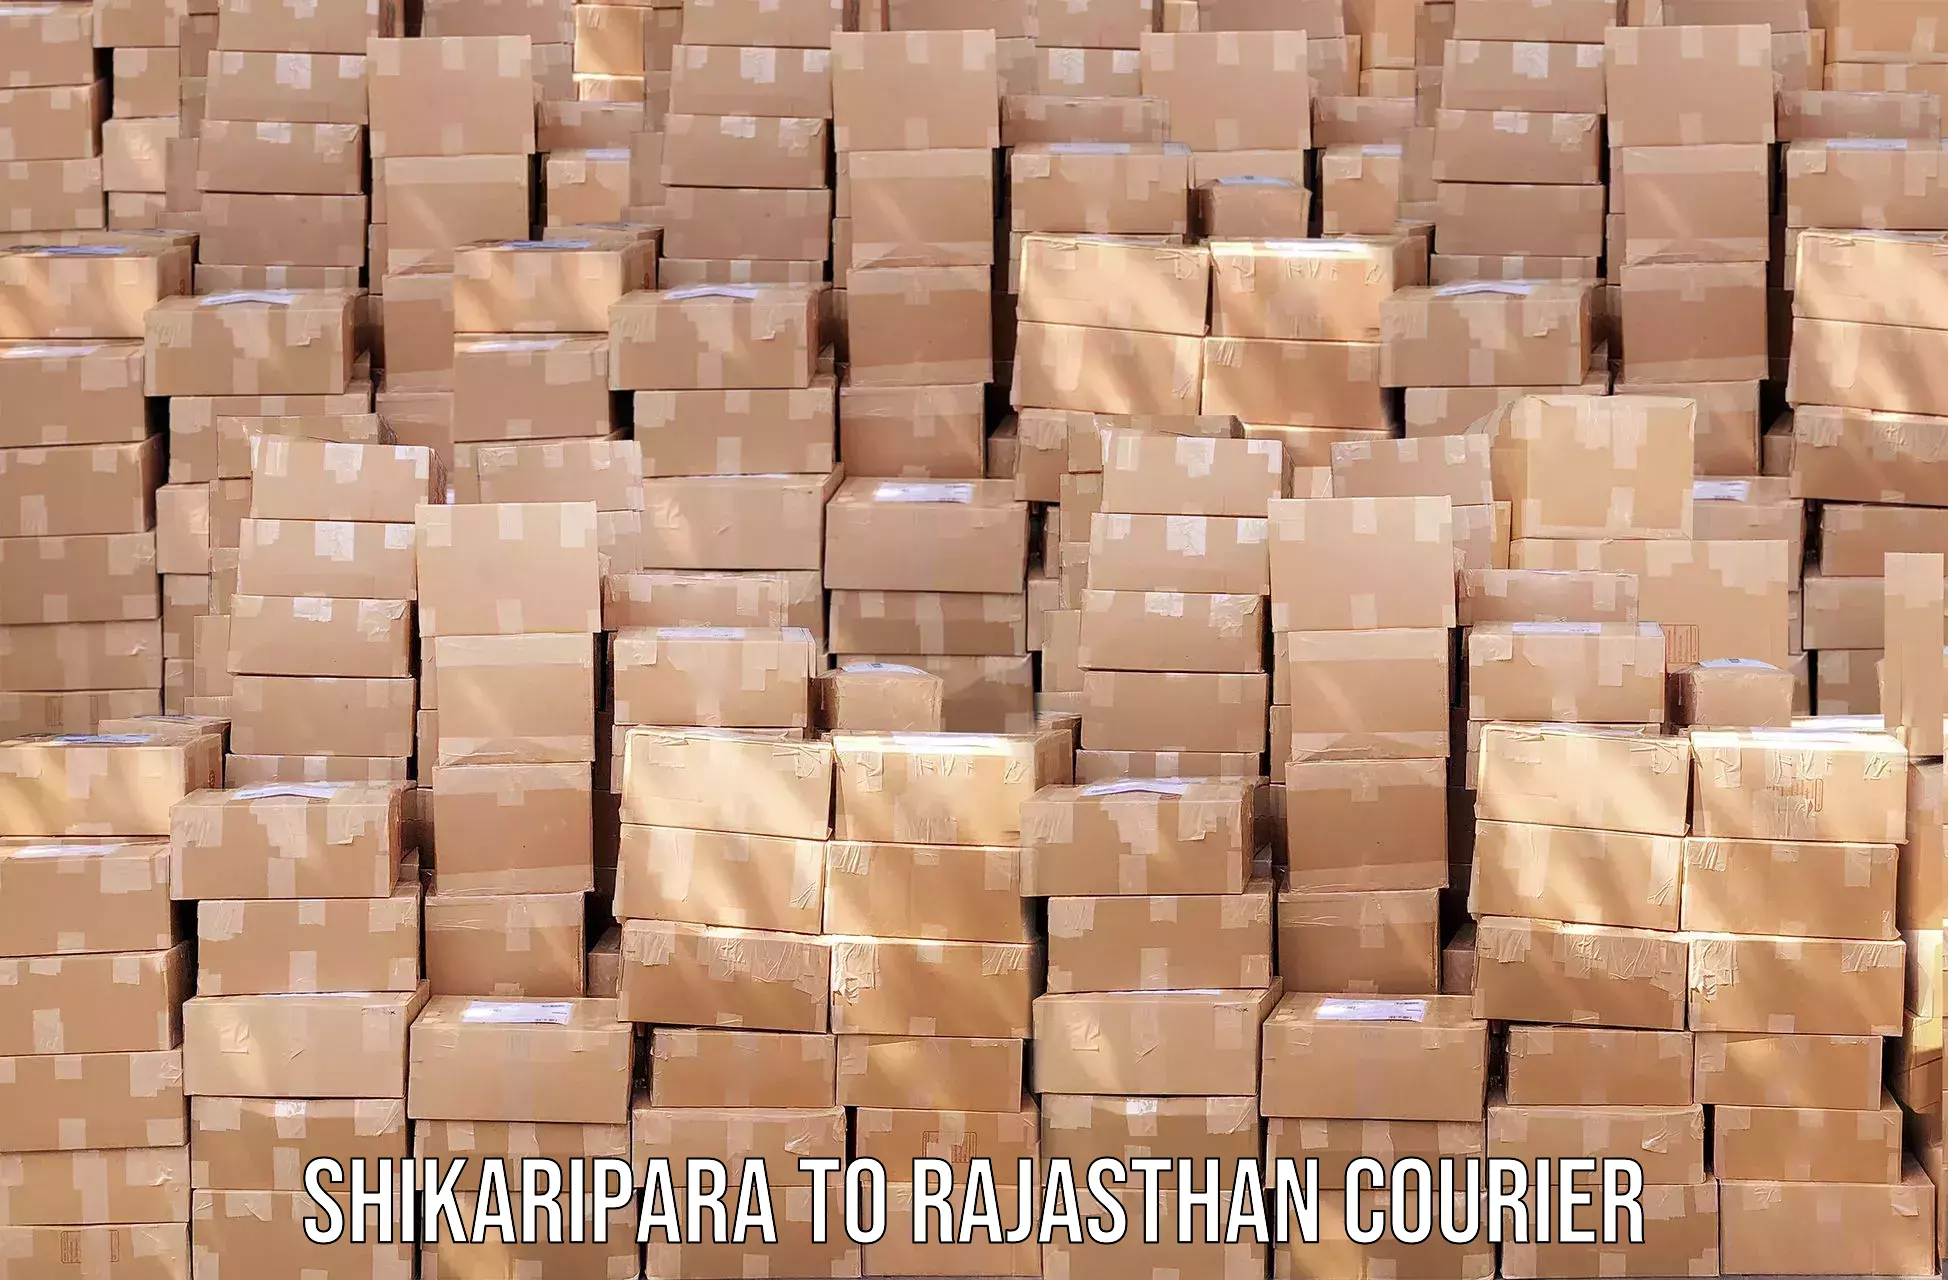 Reliable logistics providers Shikaripara to Pokhran